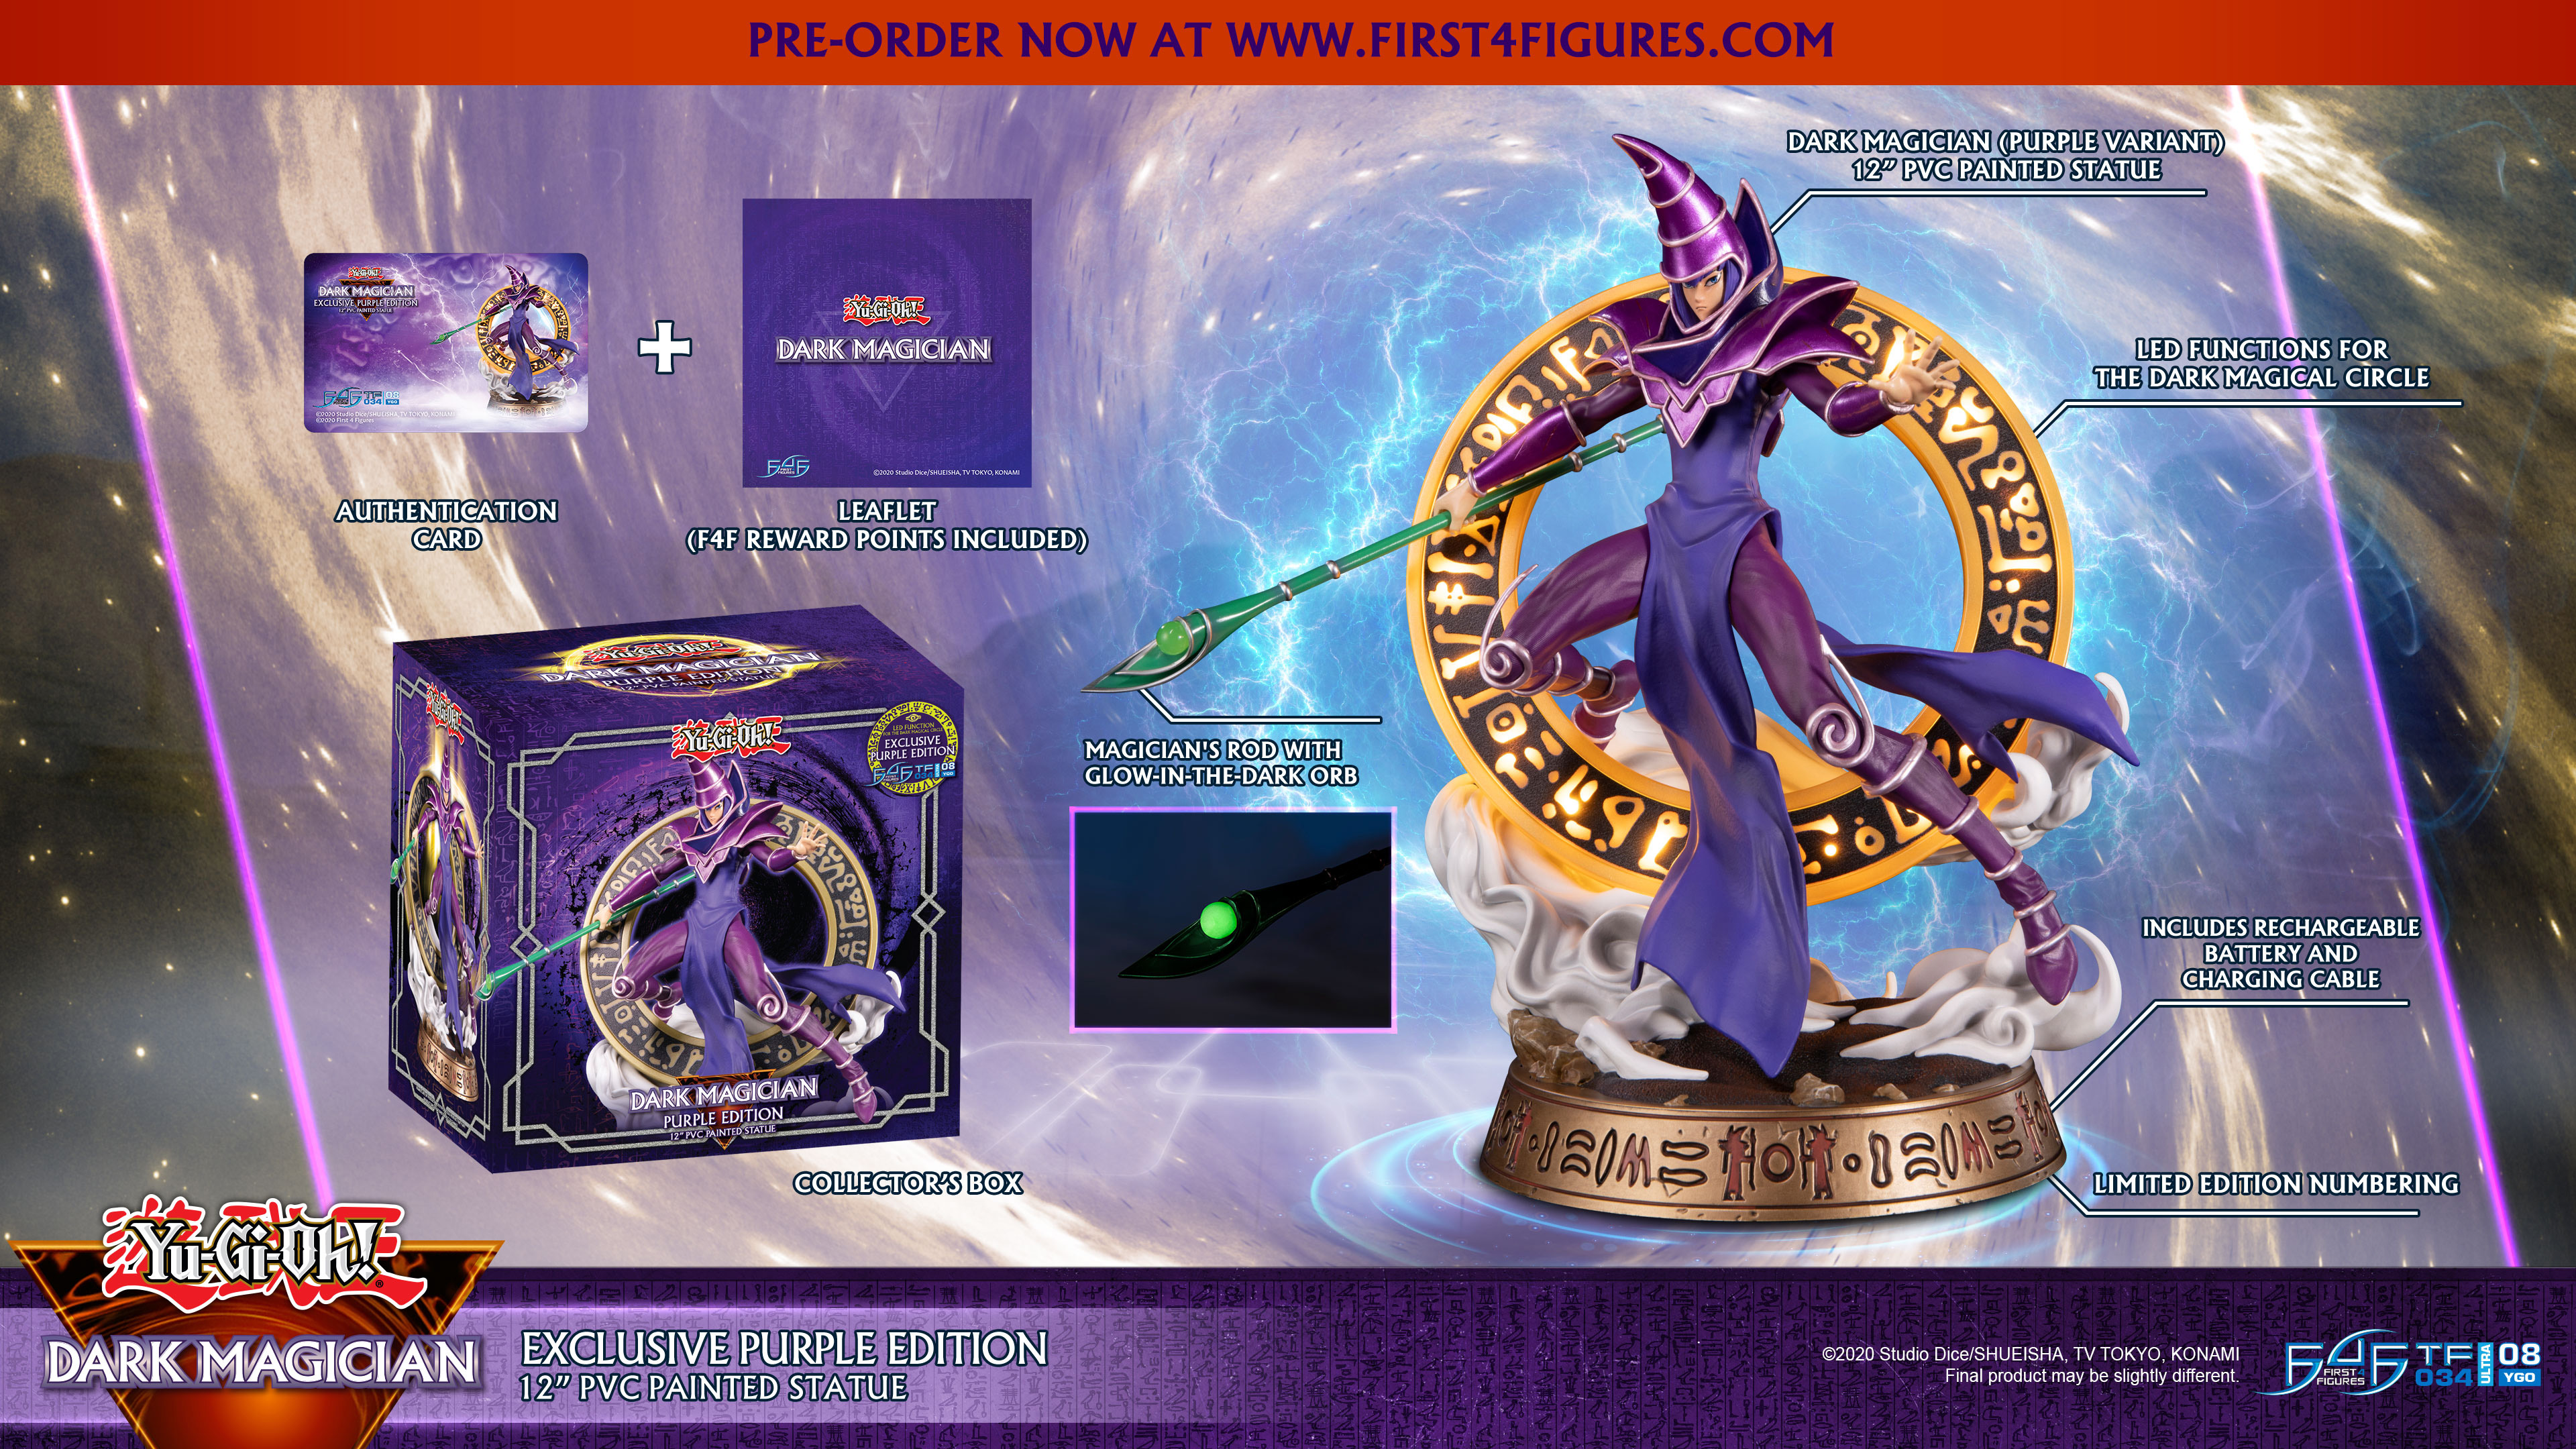 Dark Magician (Exclusive Purple Edition)